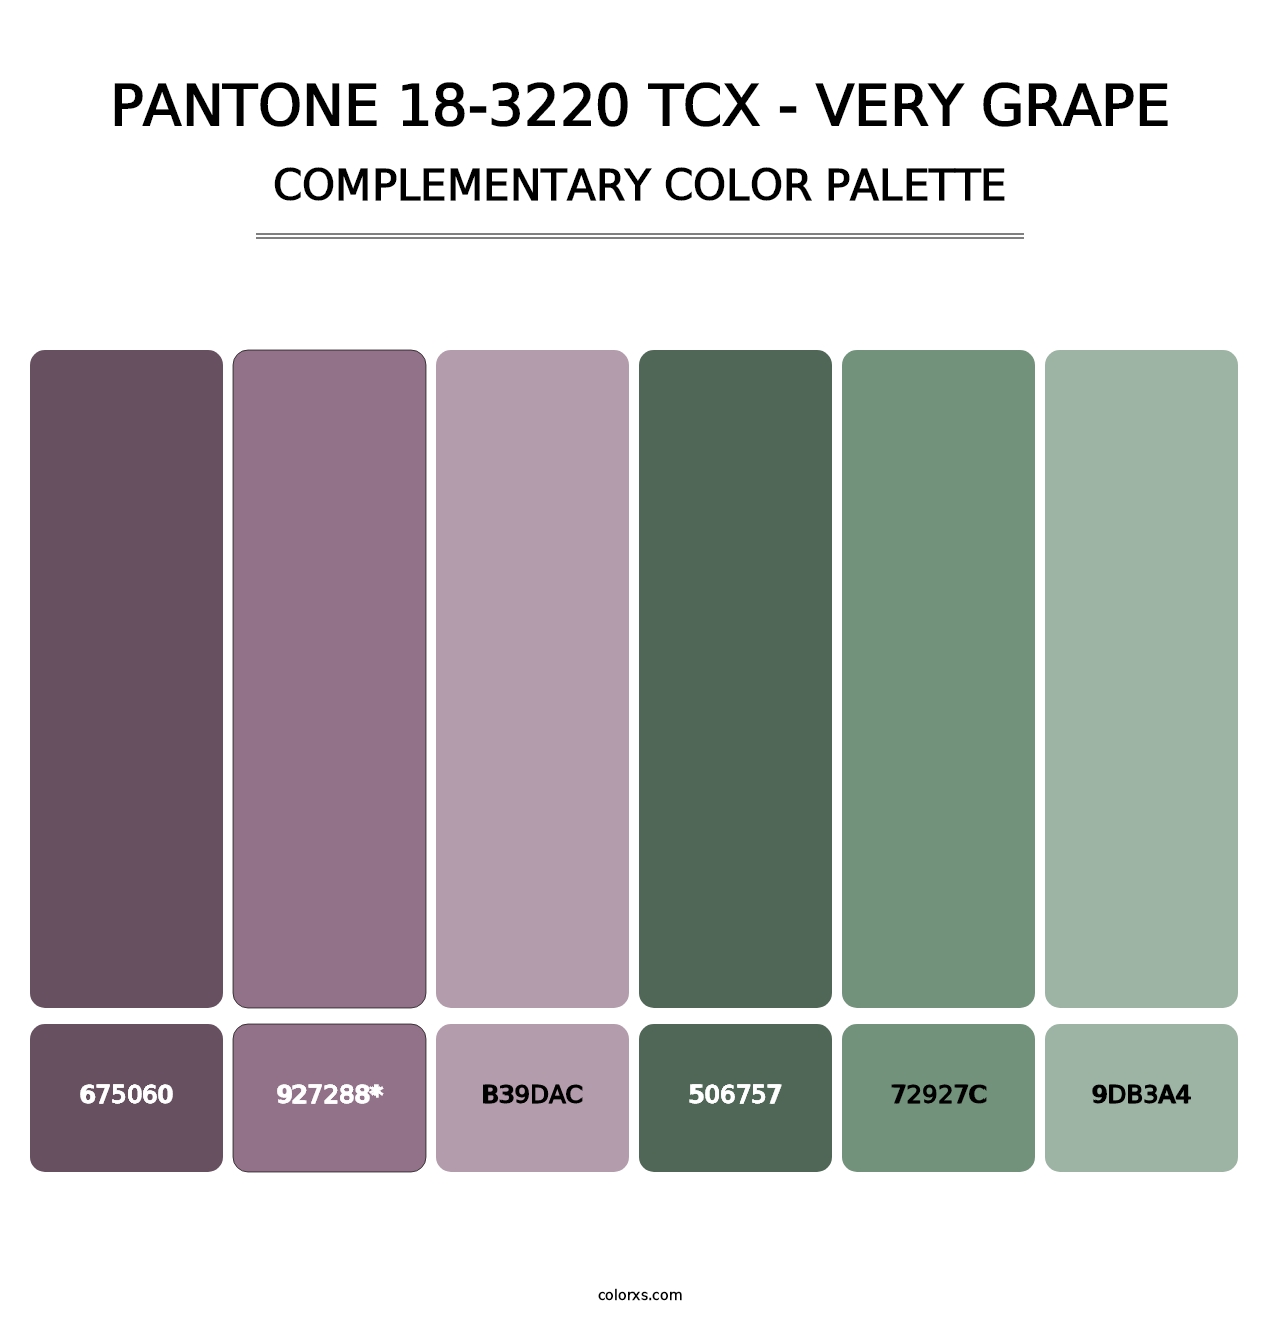 PANTONE 18-3220 TCX - Very Grape - Complementary Color Palette